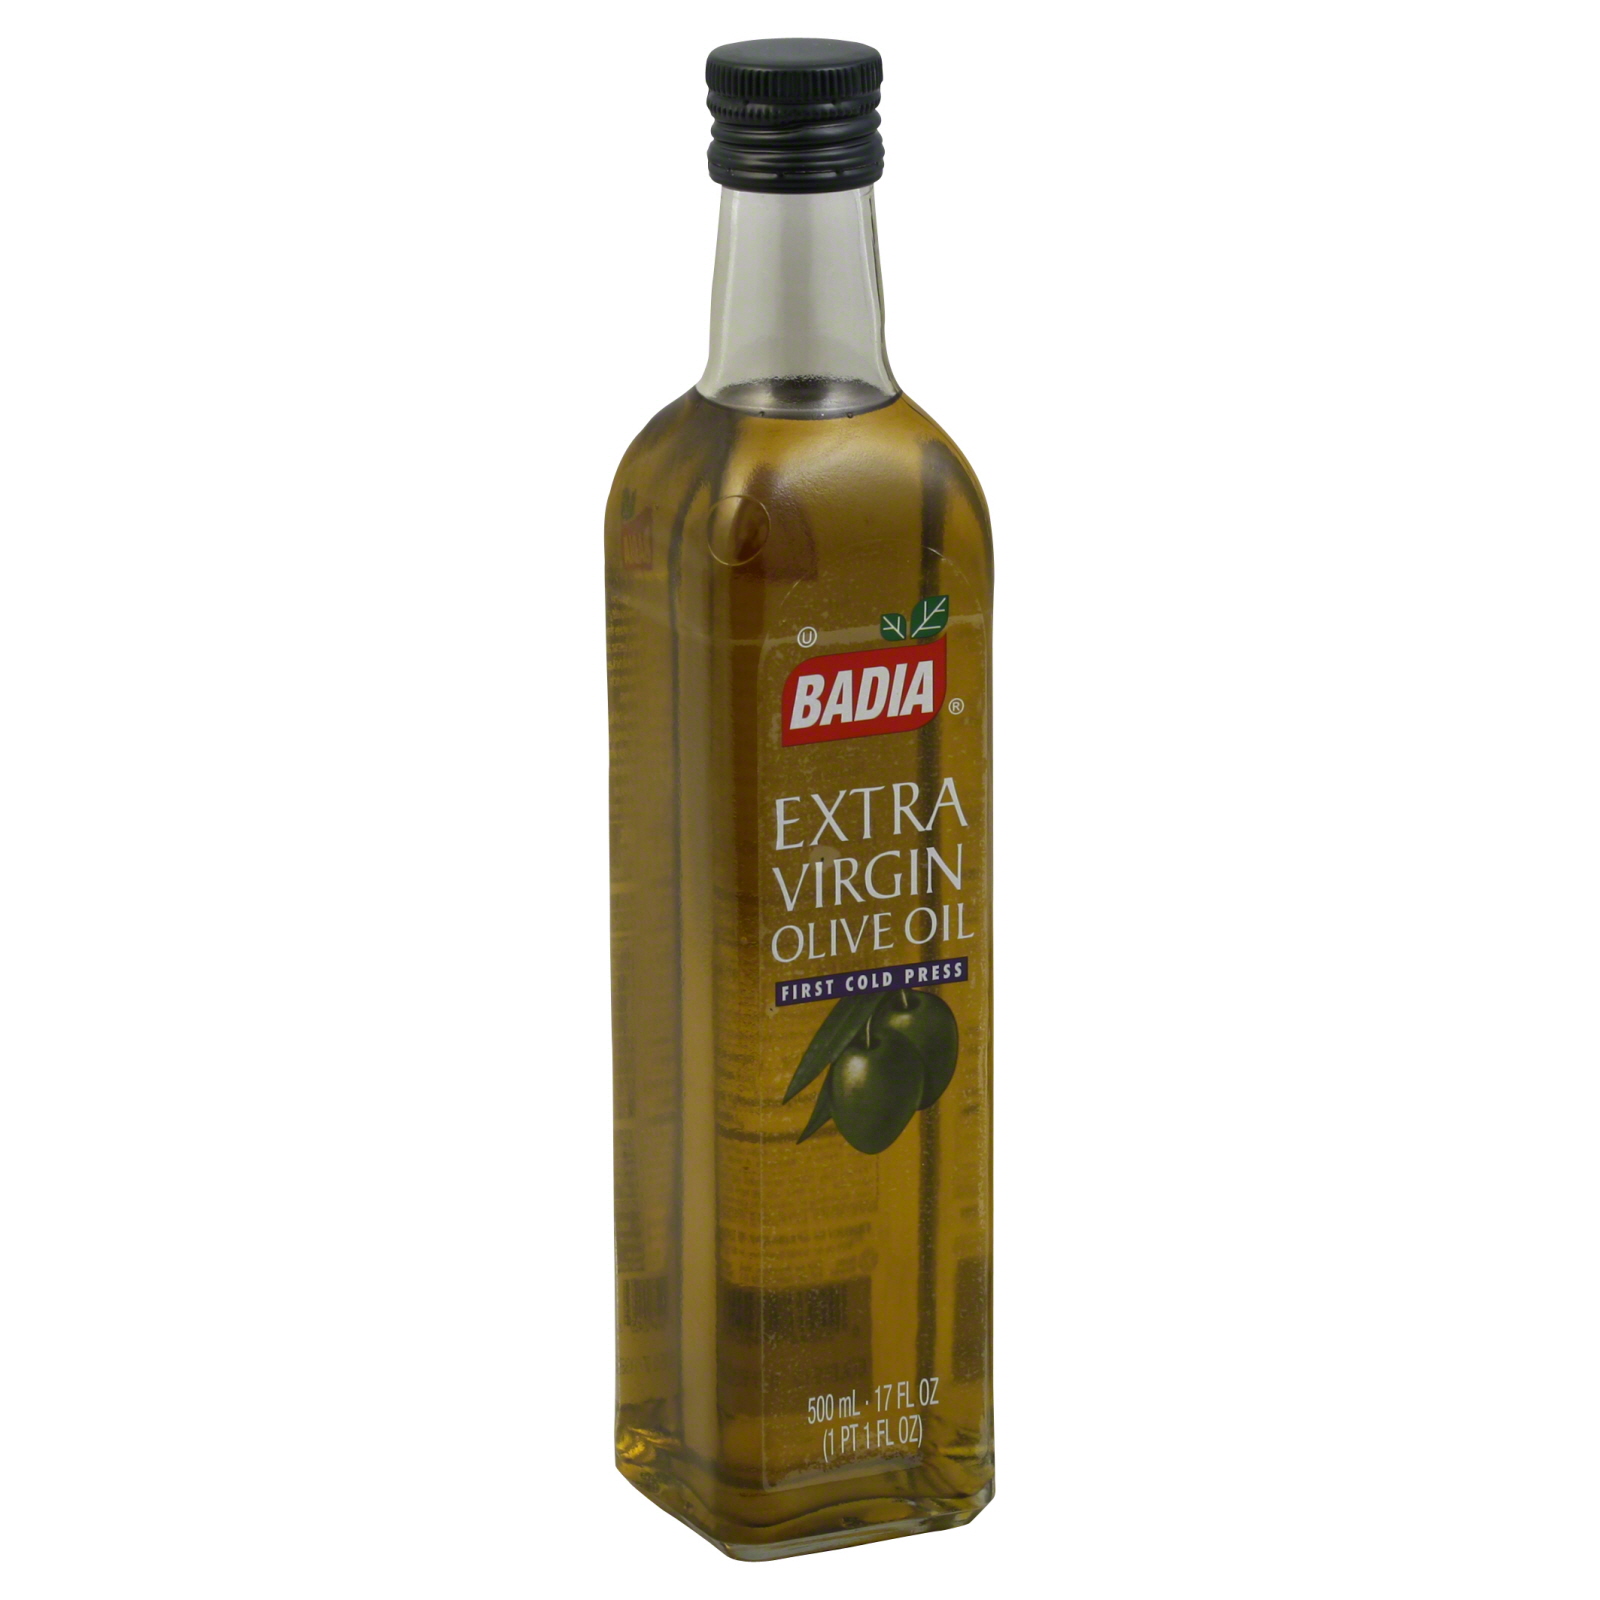 Экстра Вирджин оливковое масло для жарки. Spanish Picual Olive. Оливковое масло extra virgin можно жарить